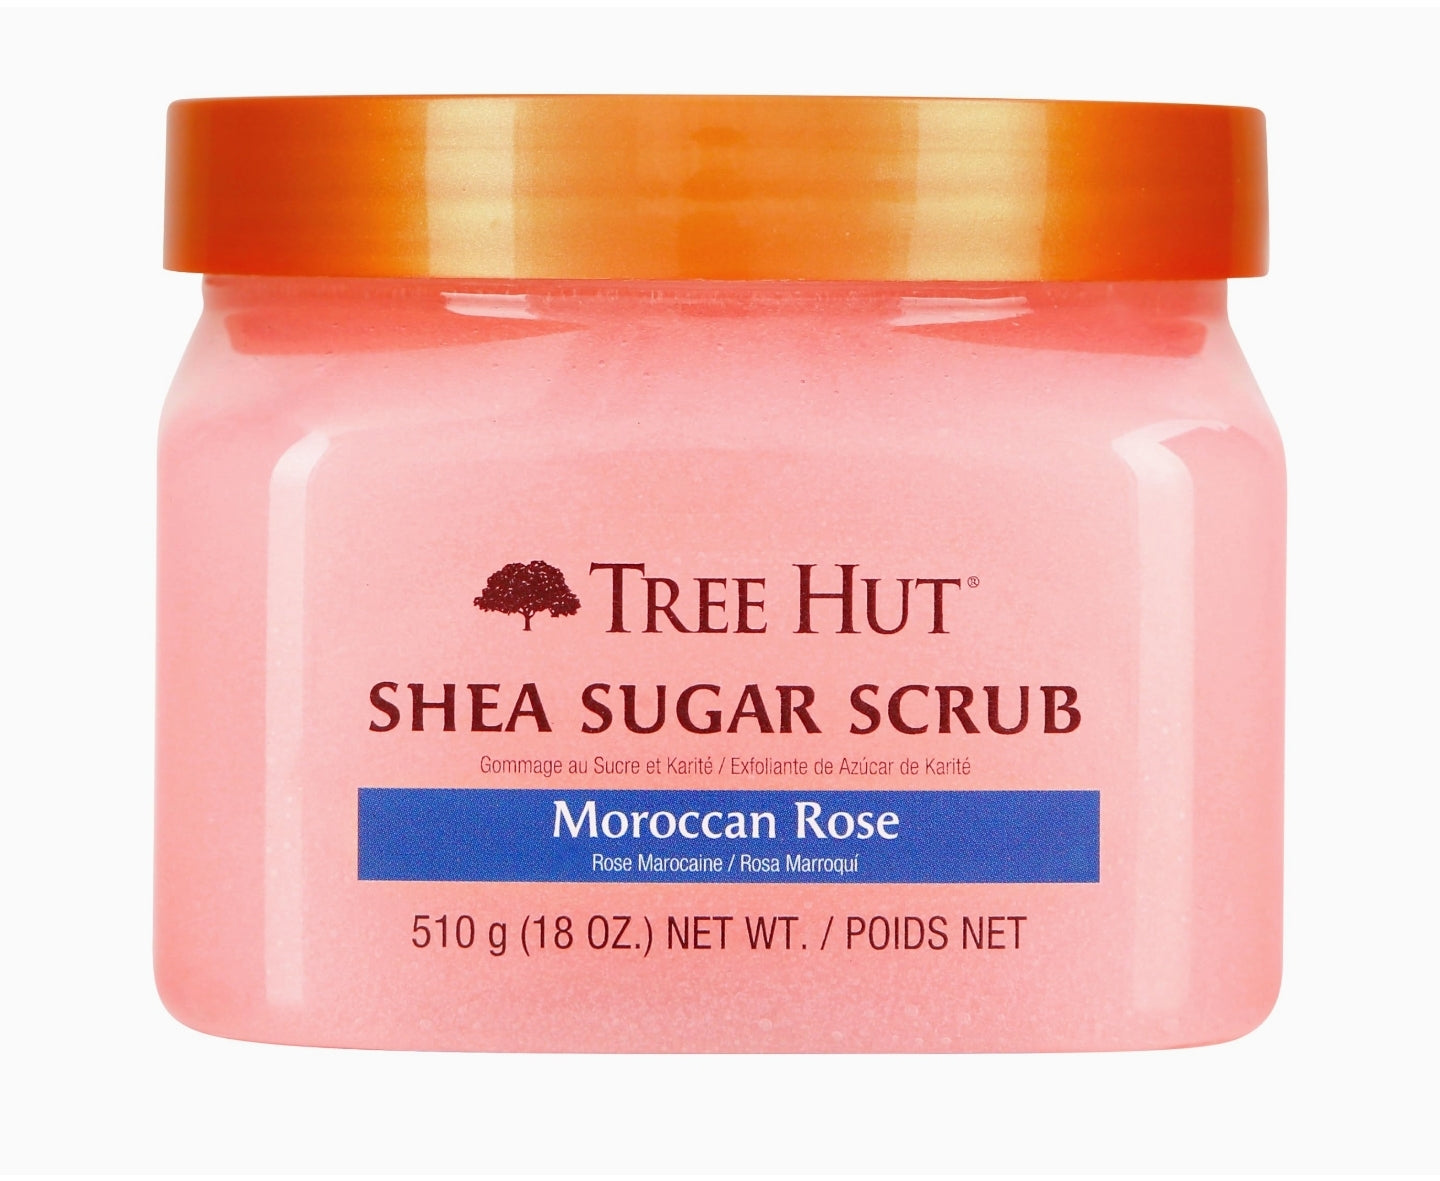 Tree Hut Shea Sugar Scrub Moroccan Rose, 18oz, Ultra Hydrating and Exfoliating Scrub for Nourishing Essential Body Care (